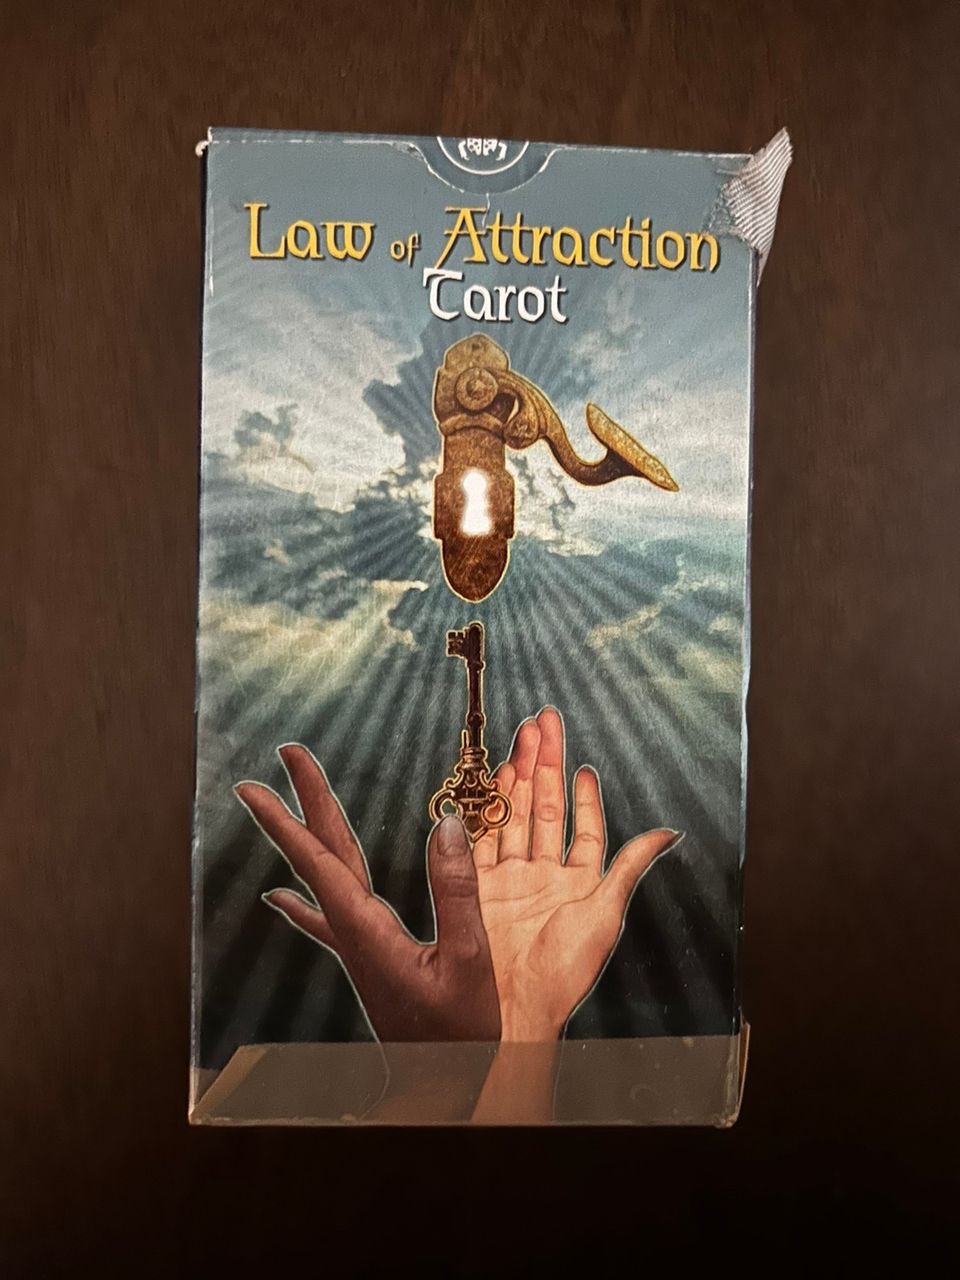 Law of Attraction Tarot